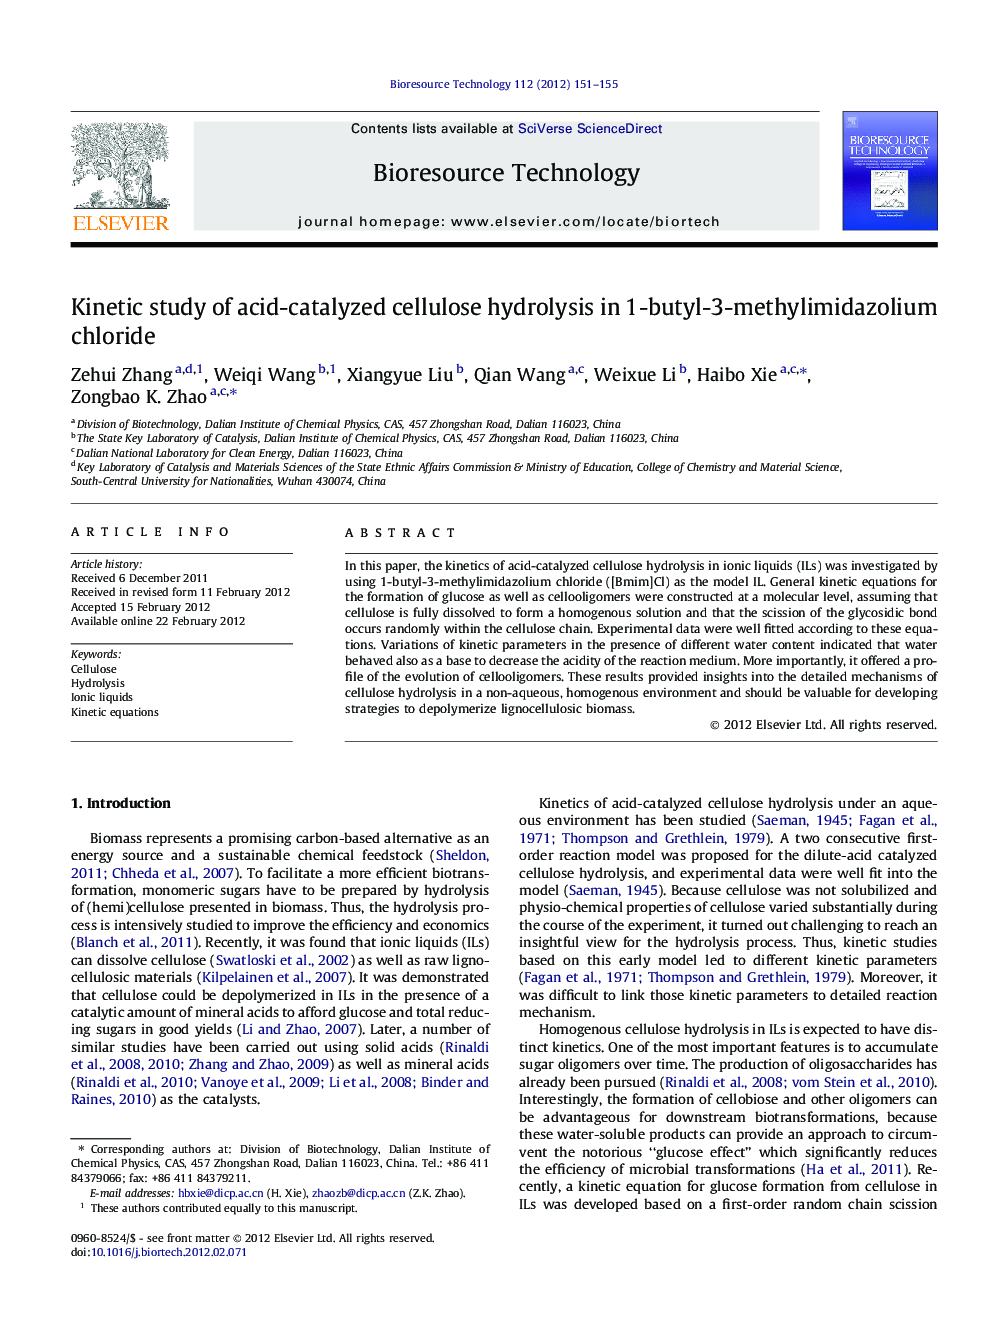 Kinetic study of acid-catalyzed cellulose hydrolysis in 1-butyl-3-methylimidazolium chloride